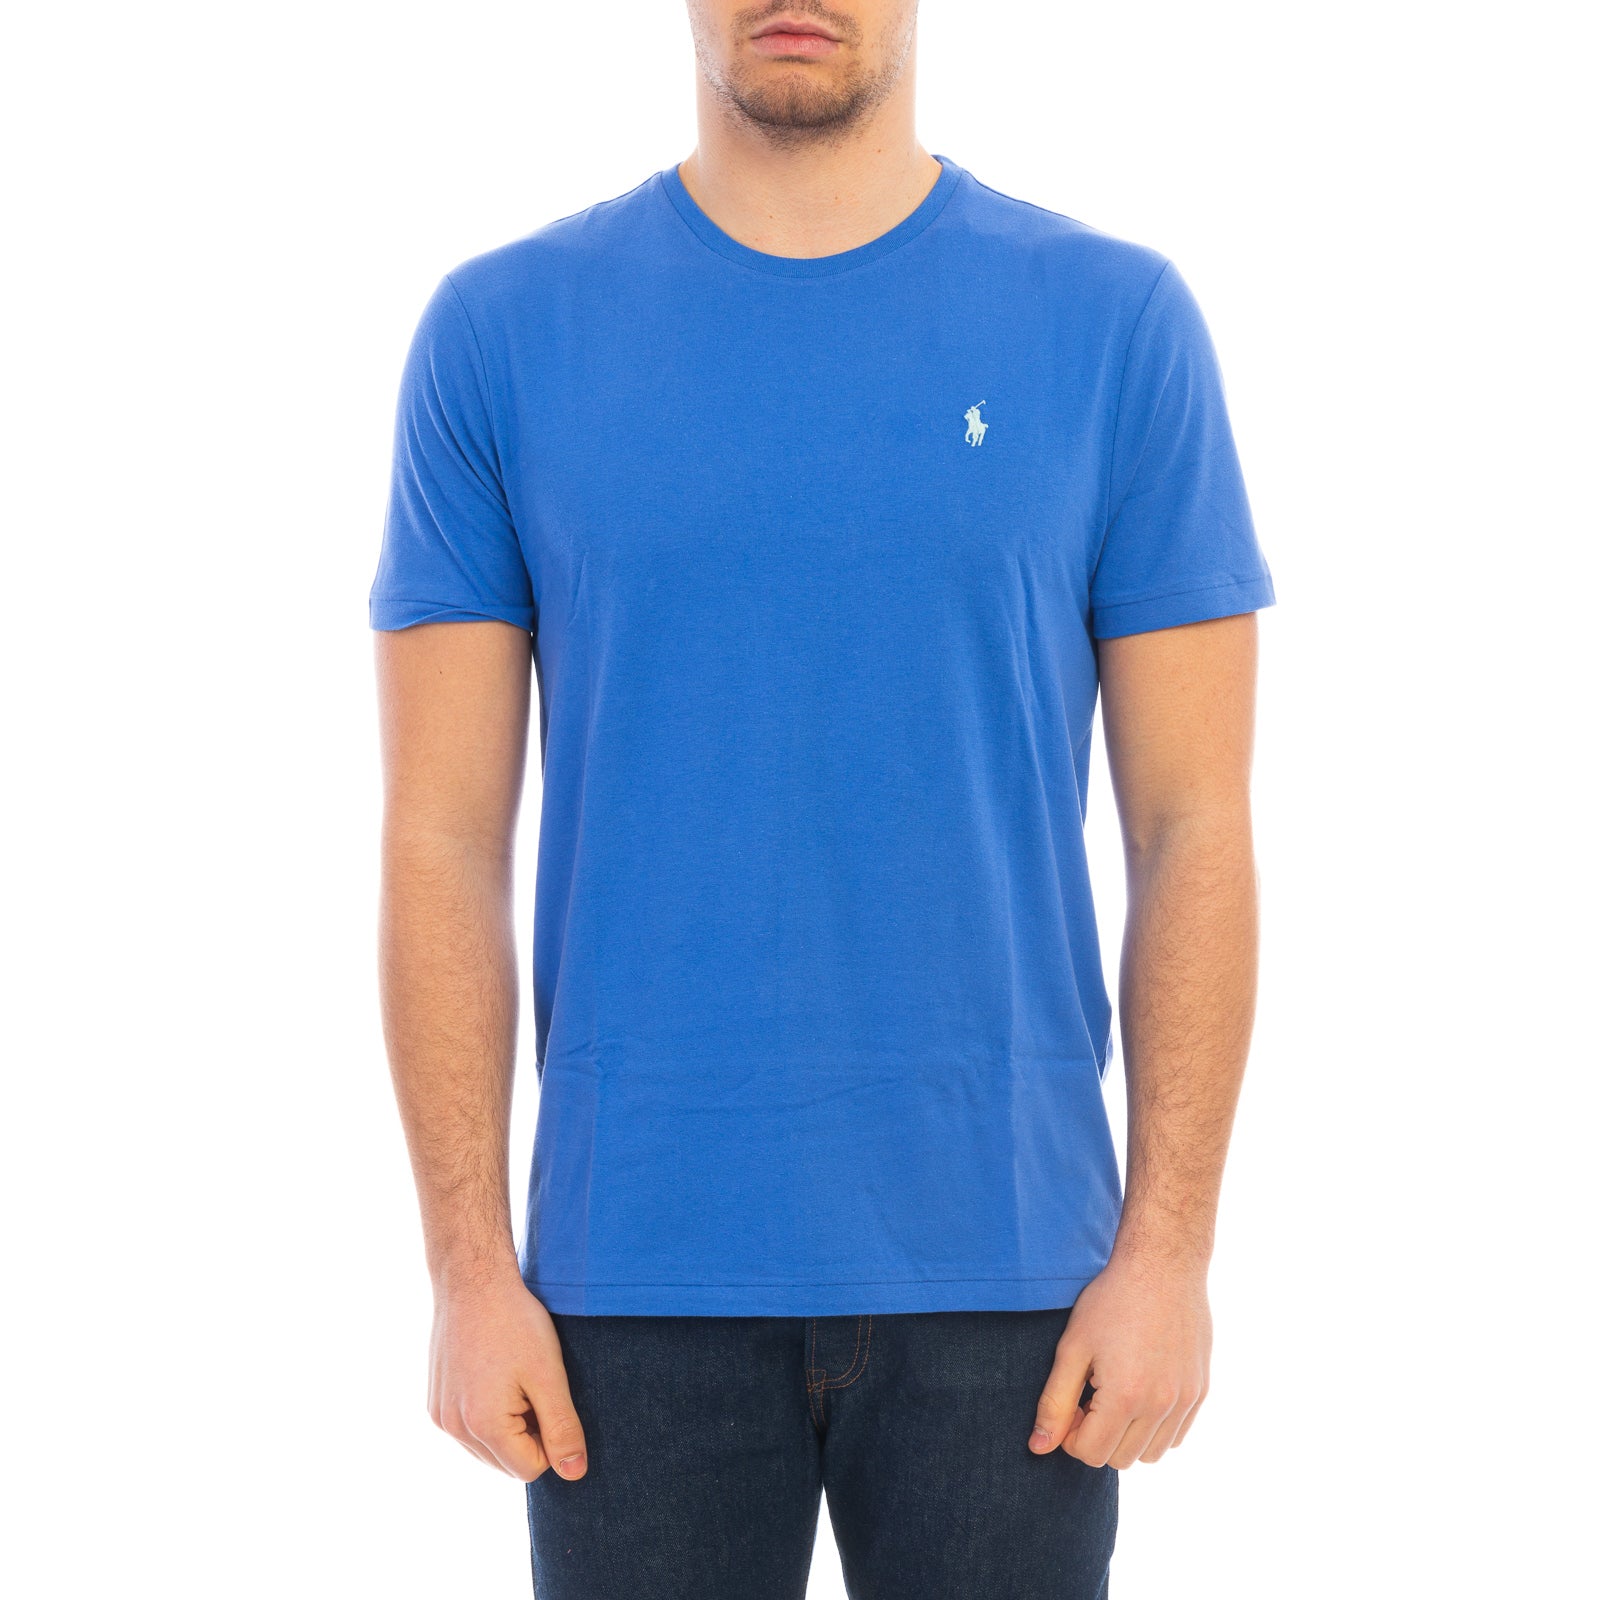 T-shirt POLO RALPH LAUREN
Maidstone blue